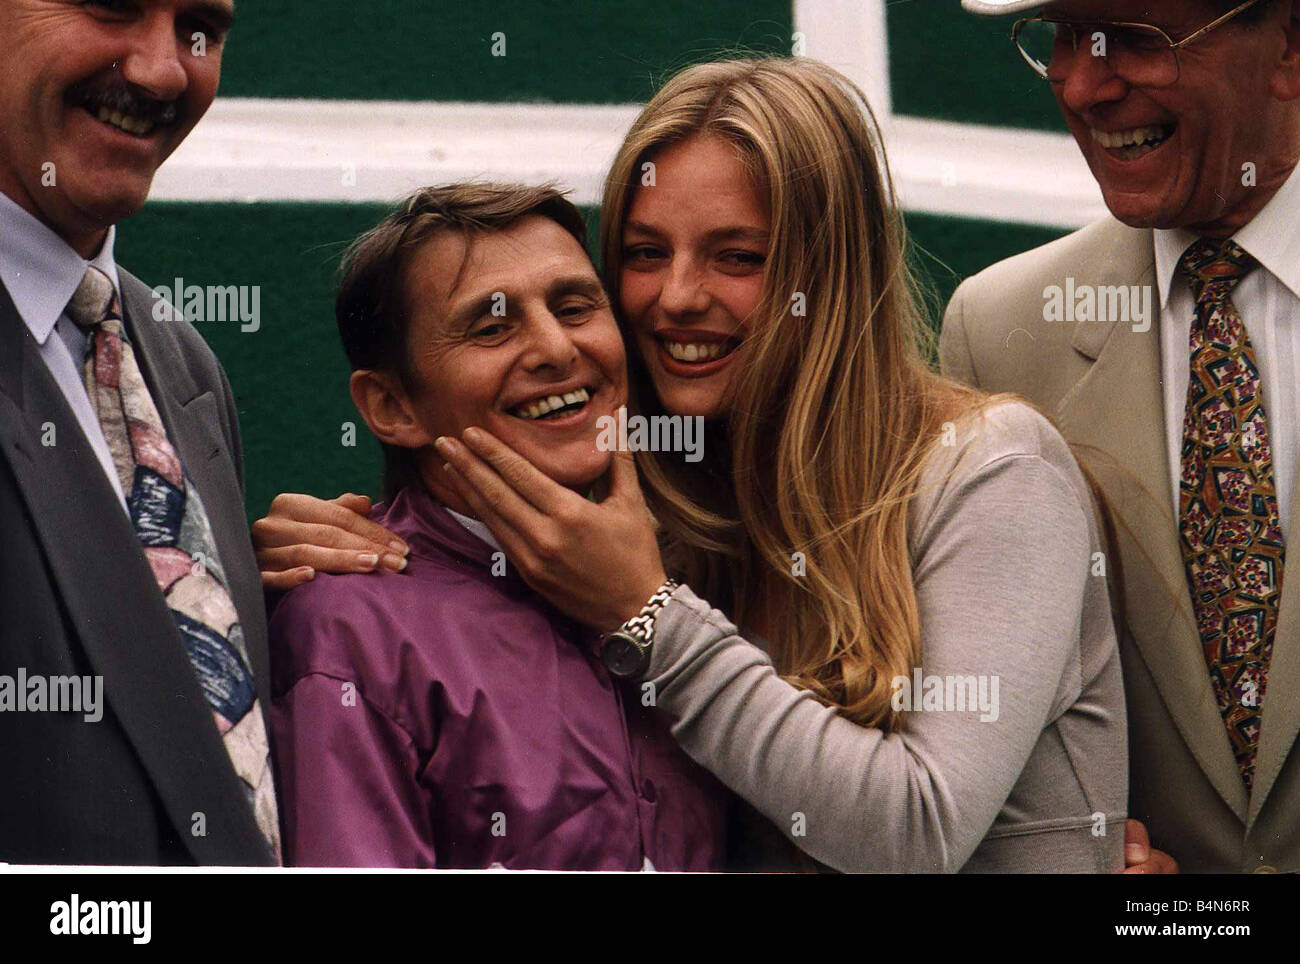 Willie Carwson Jockey wearing purple silks is hugged by Model Susan Mizzi as TV Presenter Bob Holness looks on Stock Photo